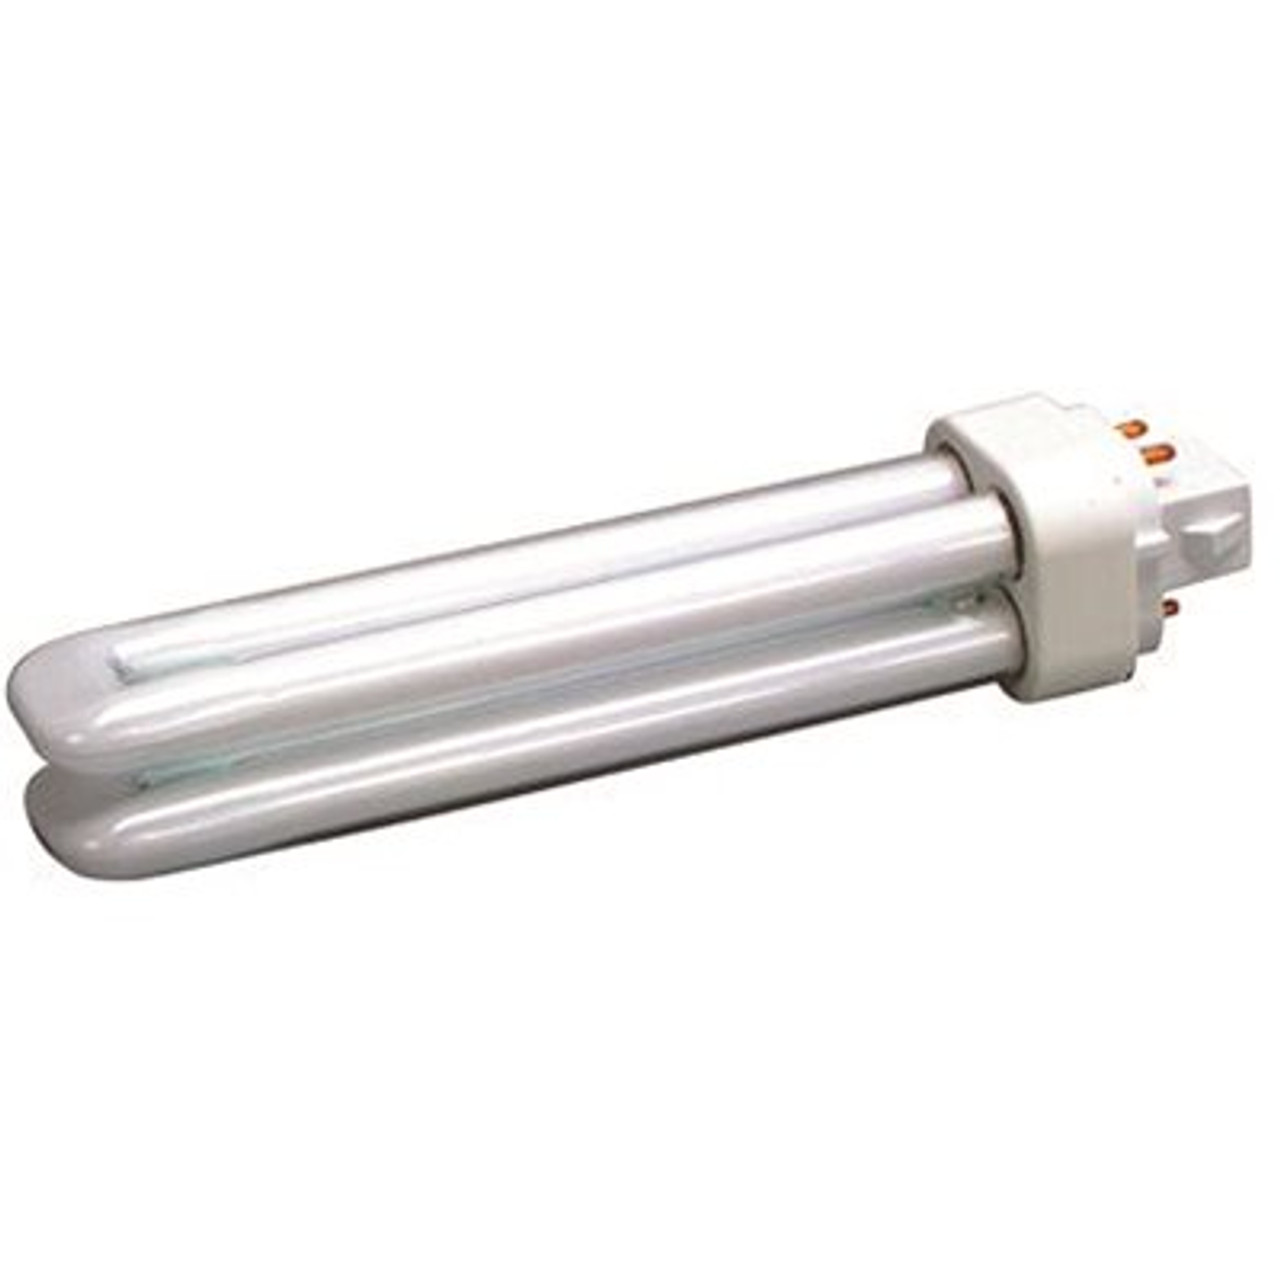 Sylvania 100-Watt Equivalent T4 Dimmable CFL Light Bulb Warm White